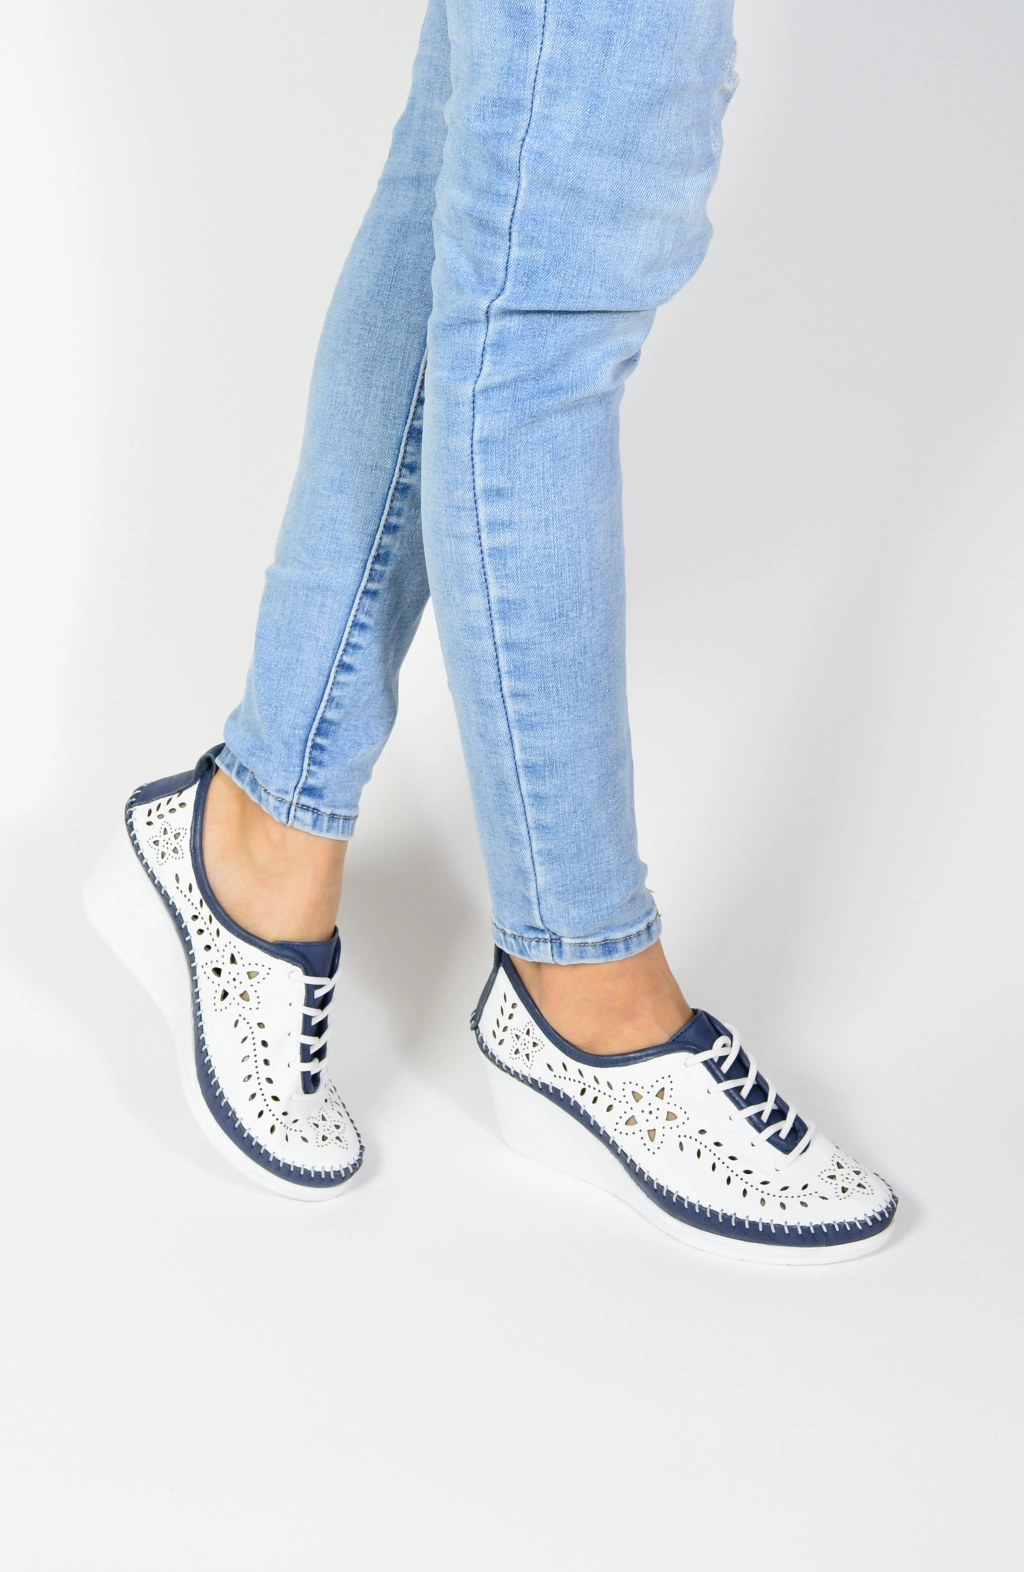 Пролетно летни обувки на платформа в бяло и синьо